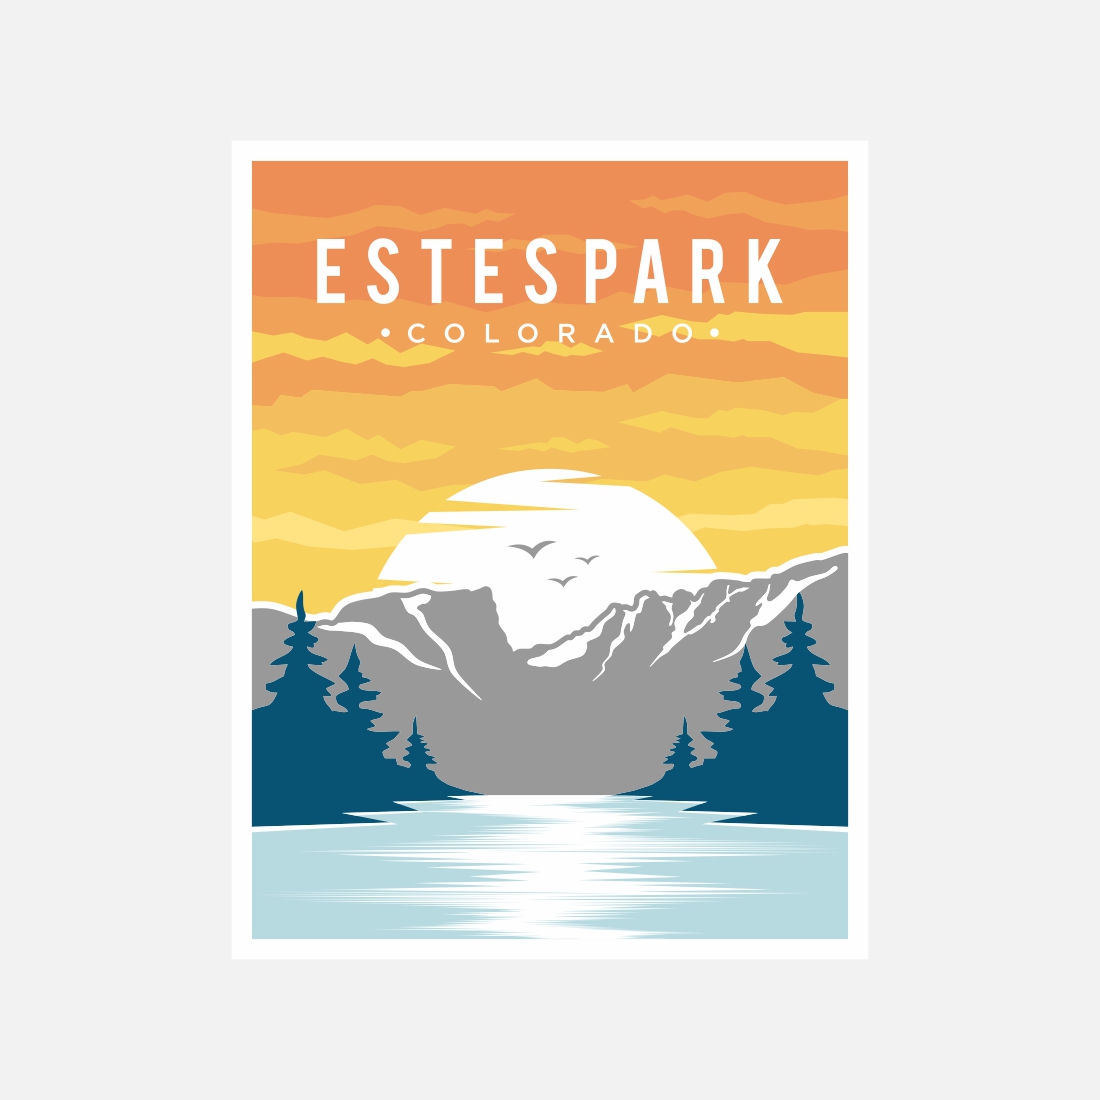 Estes Park poster vector illustration design – Only $7 cover image.